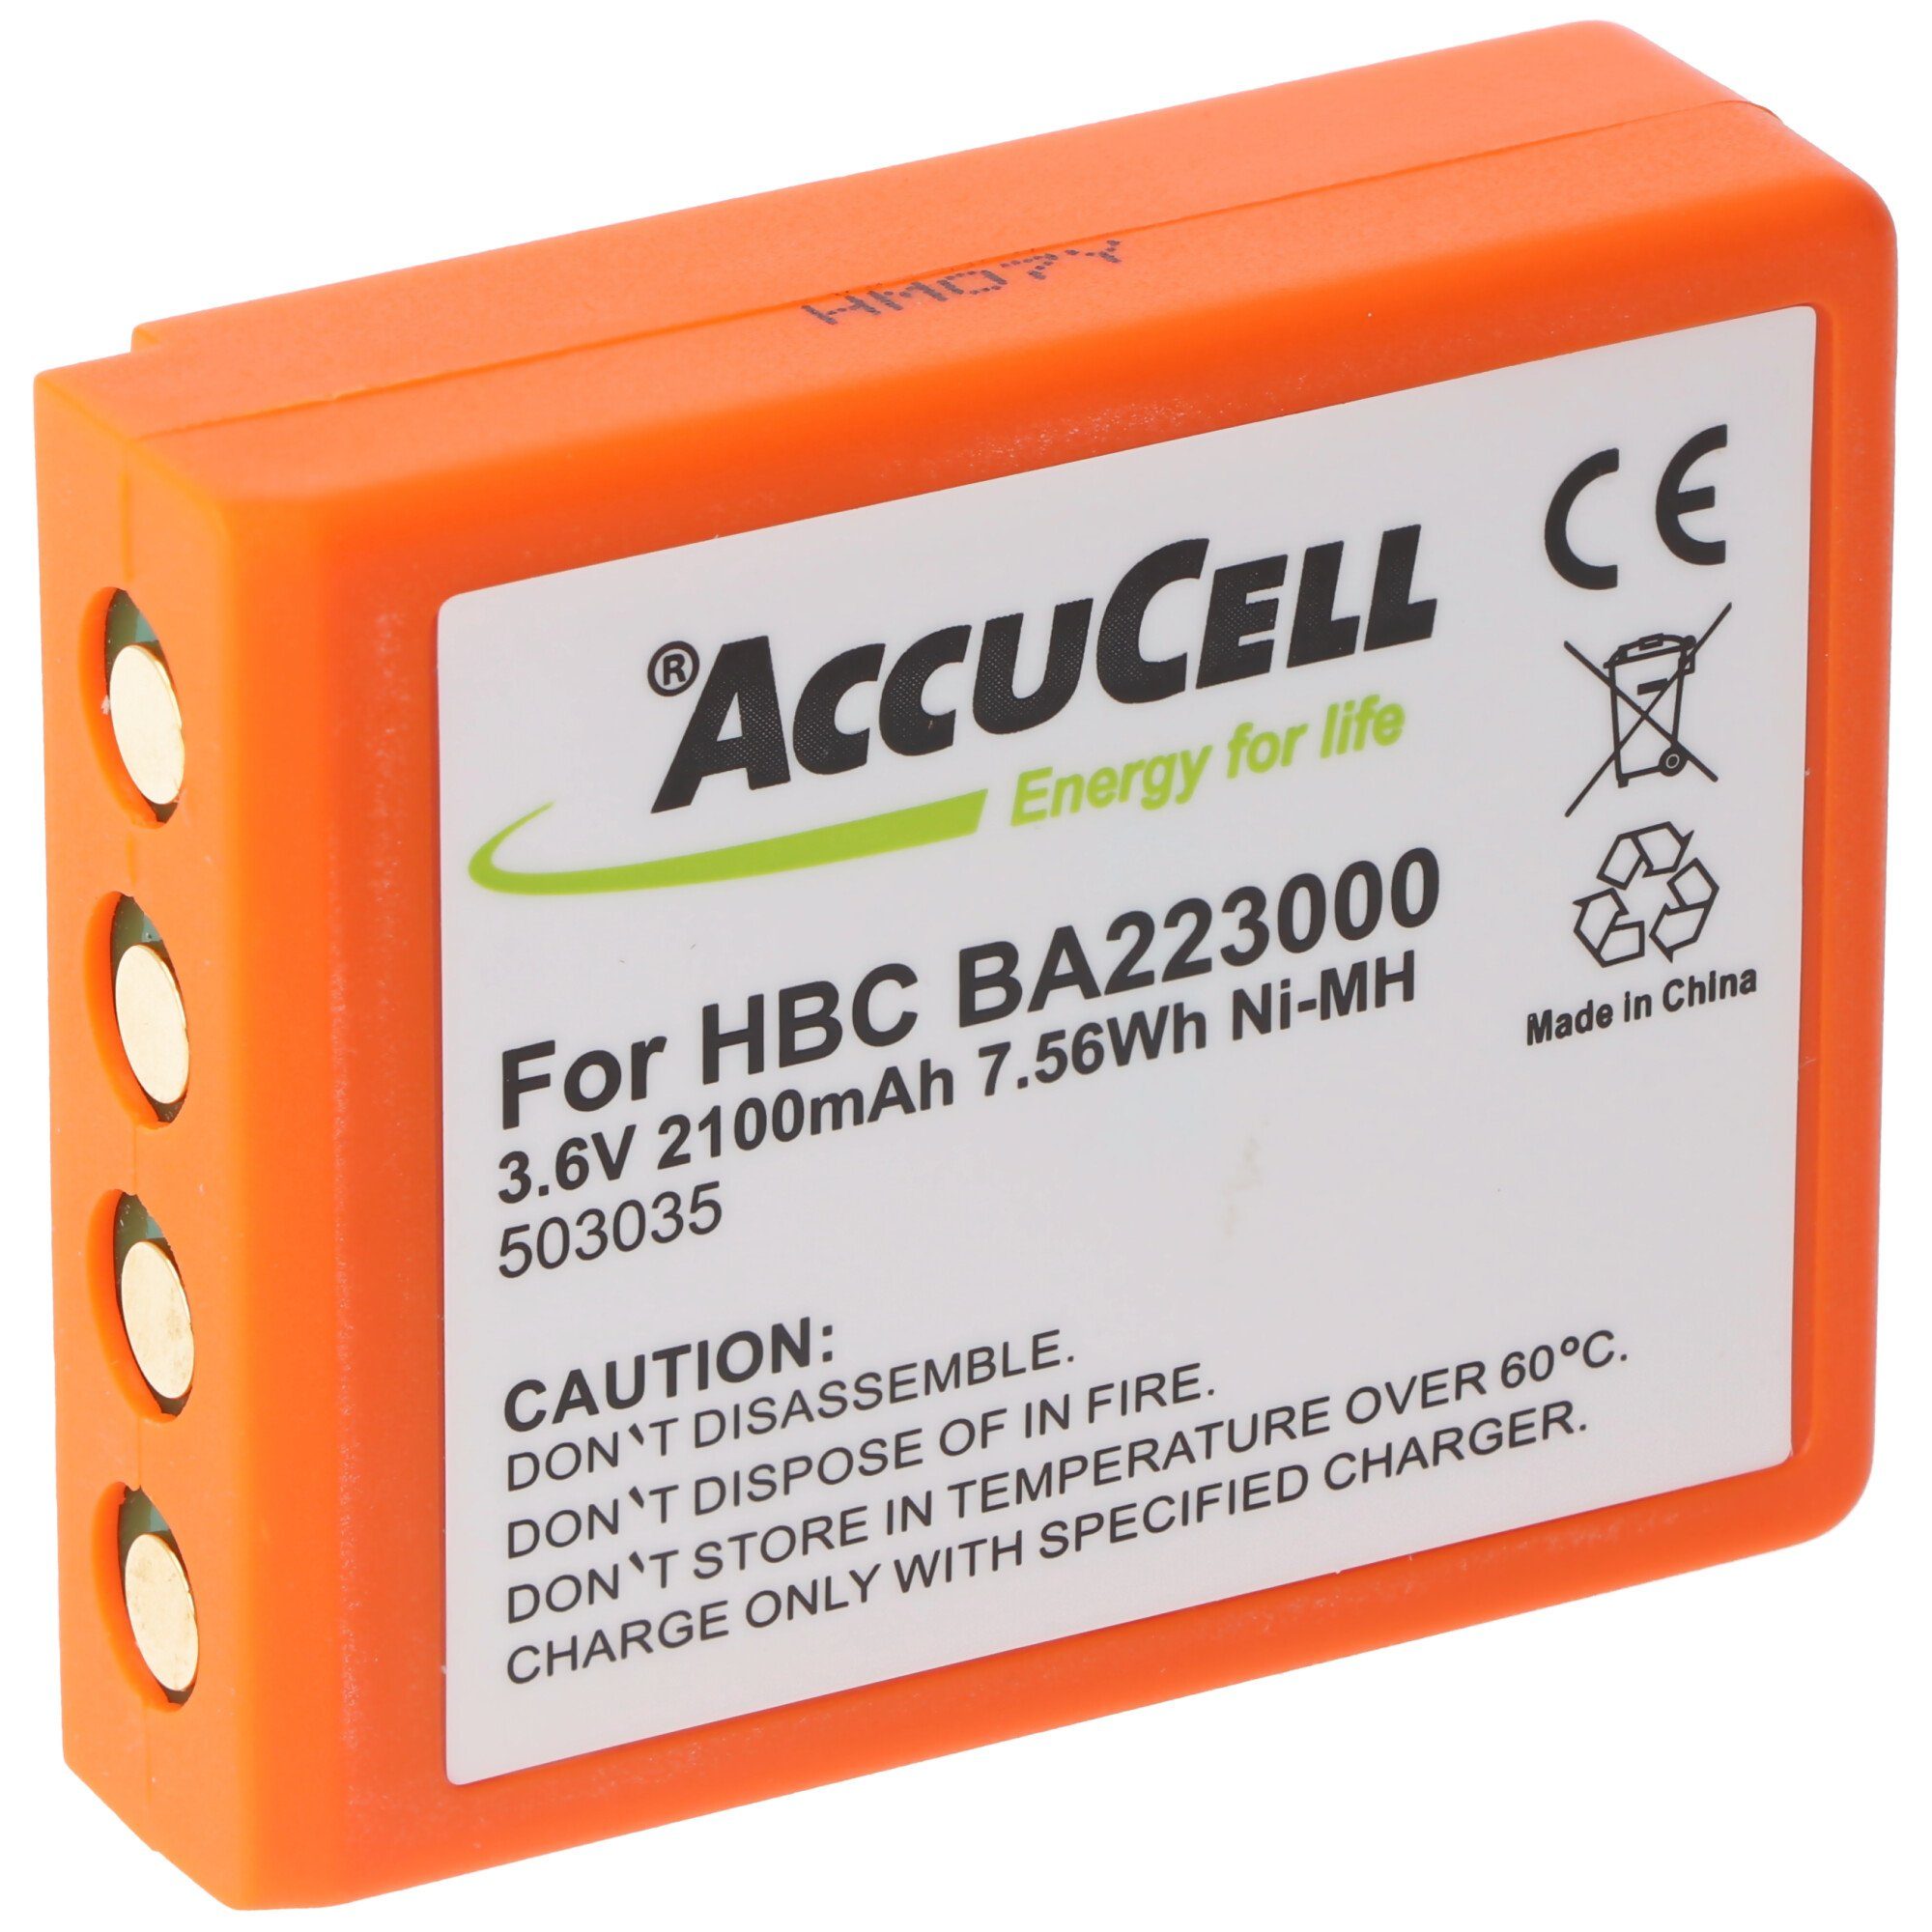 AccuCell HBC BA223000 Akku passend für HBC Kransteuerung FBFUB06N, FUB06N von Akku 2200 mAh (3,6 V)